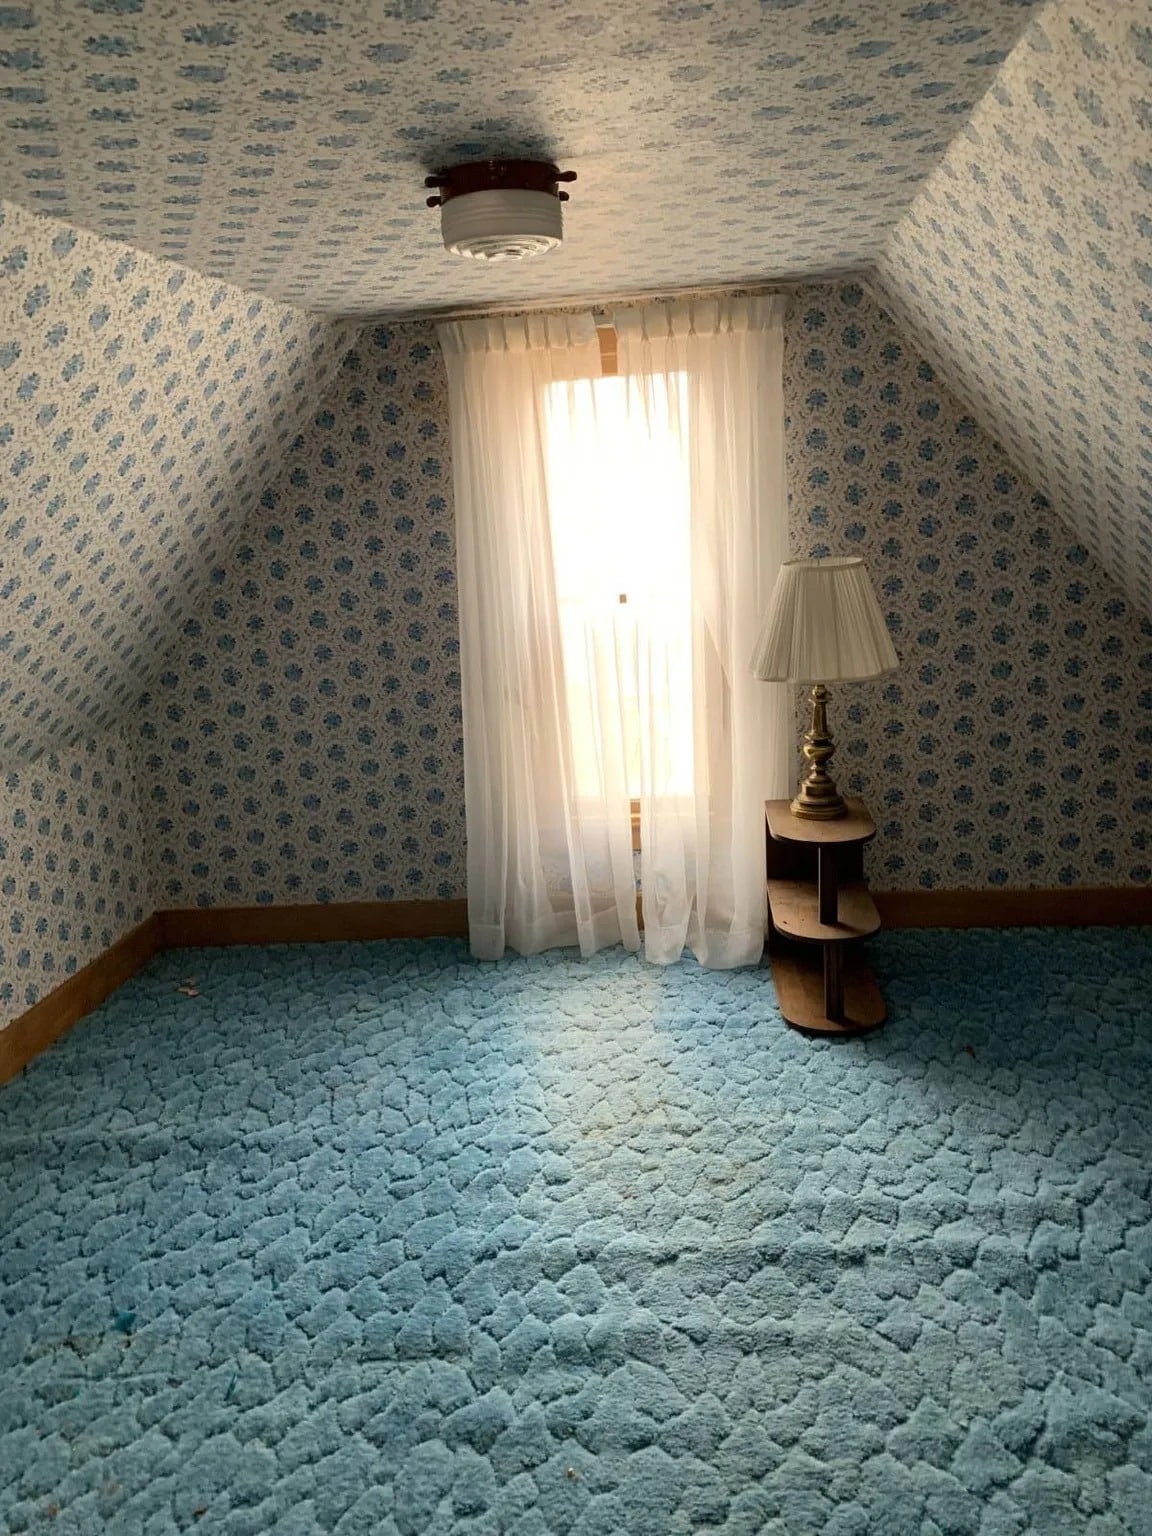 A 5-Bedroom C. 1900 Kansas Farmhouse For Sale On 5 Acres Under $101,000 - 141